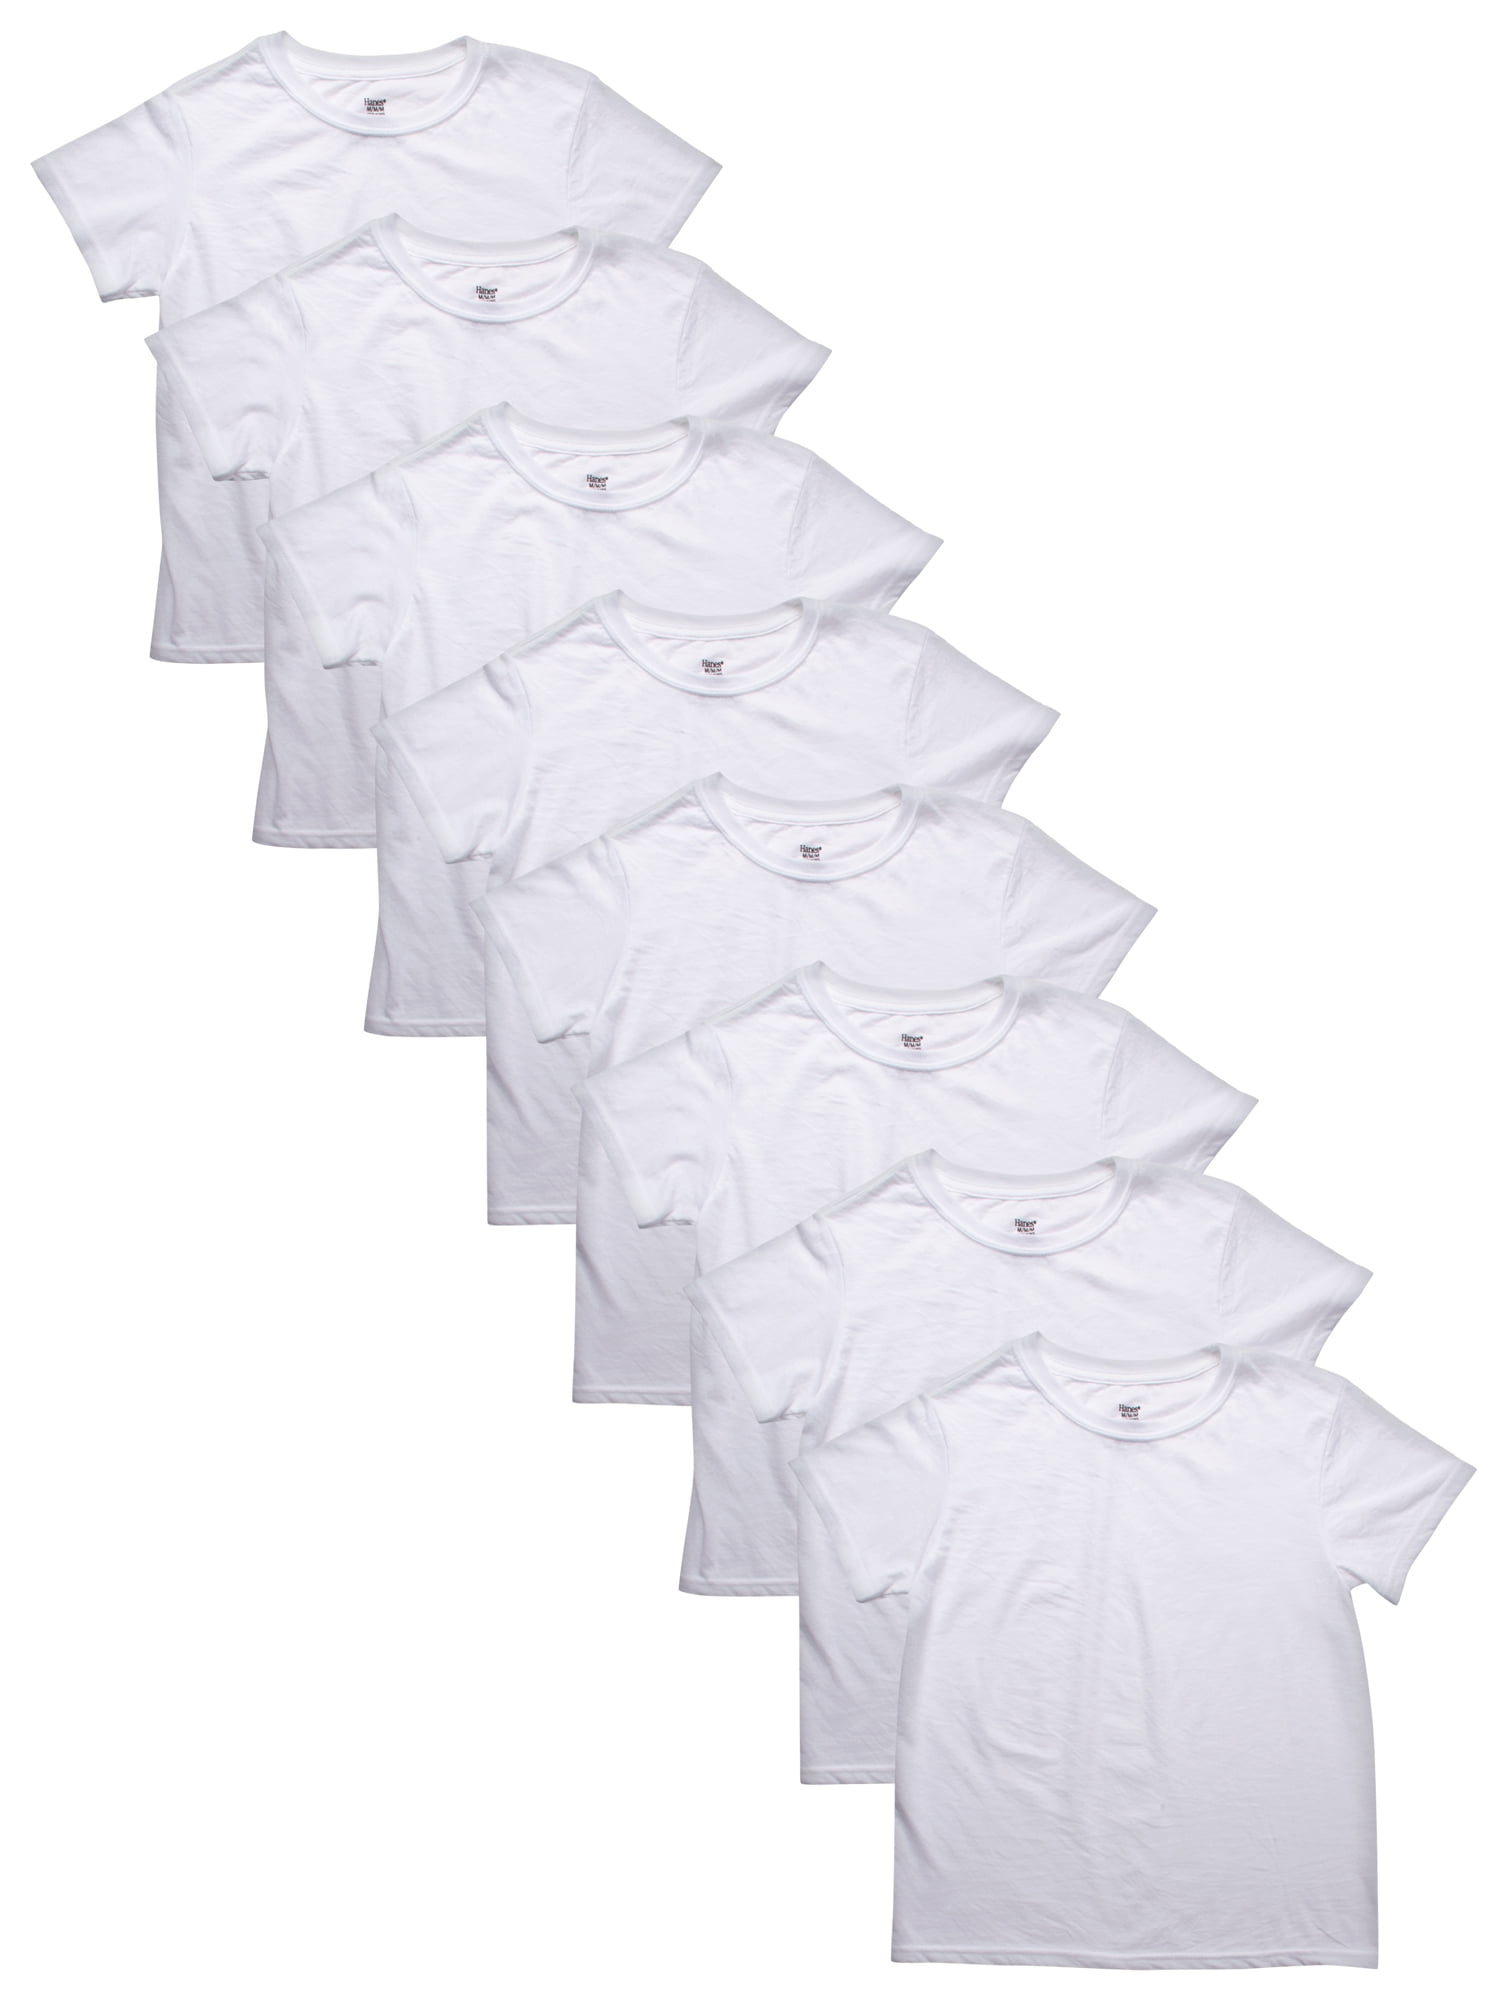 Hanes 192503320201 Boys EcoSmart Crewneck Undershirt White - Small - Pack of 5